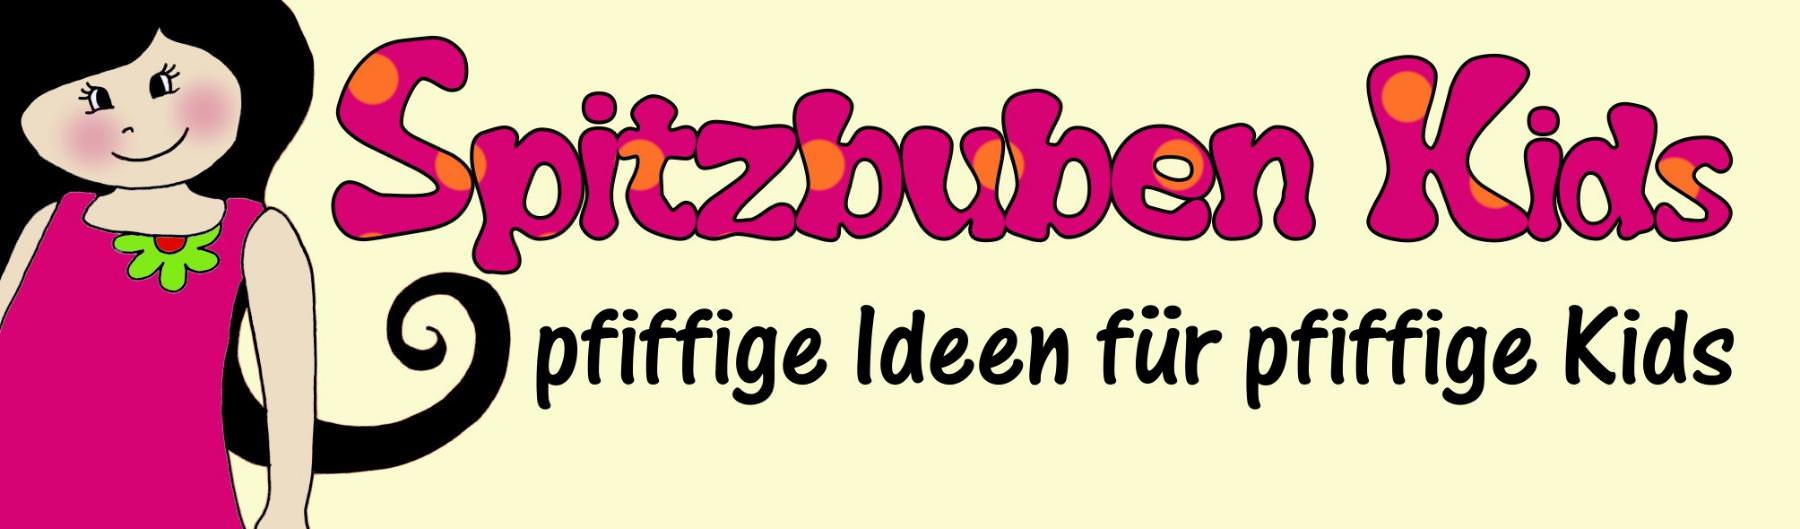 Spitzbuben_Kids_Hintergrundbild_Shop